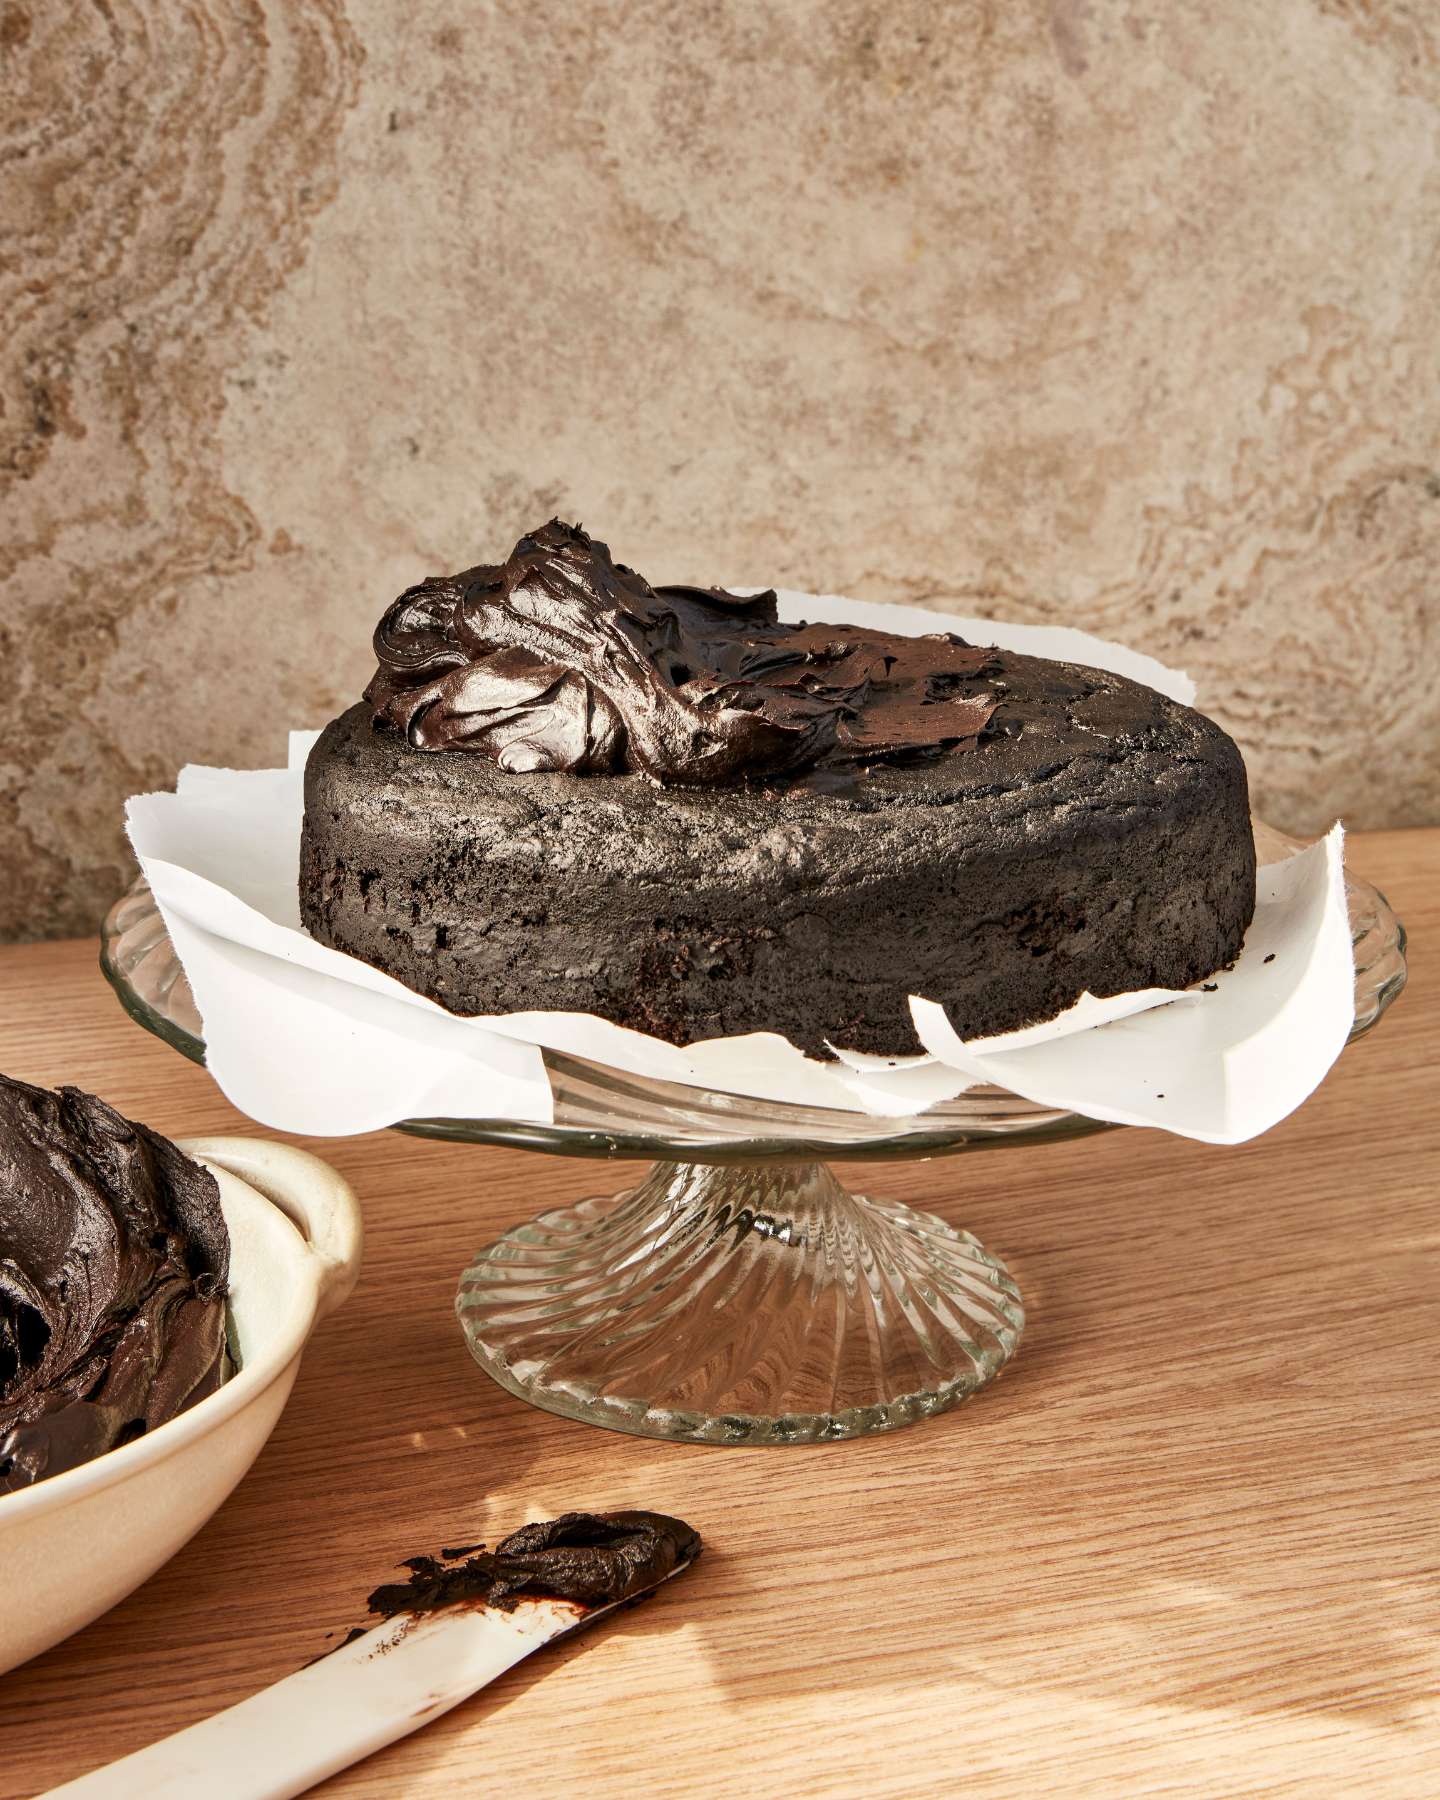 Black Tie Chocolate Cake with chocolate icing by Casa de Suna